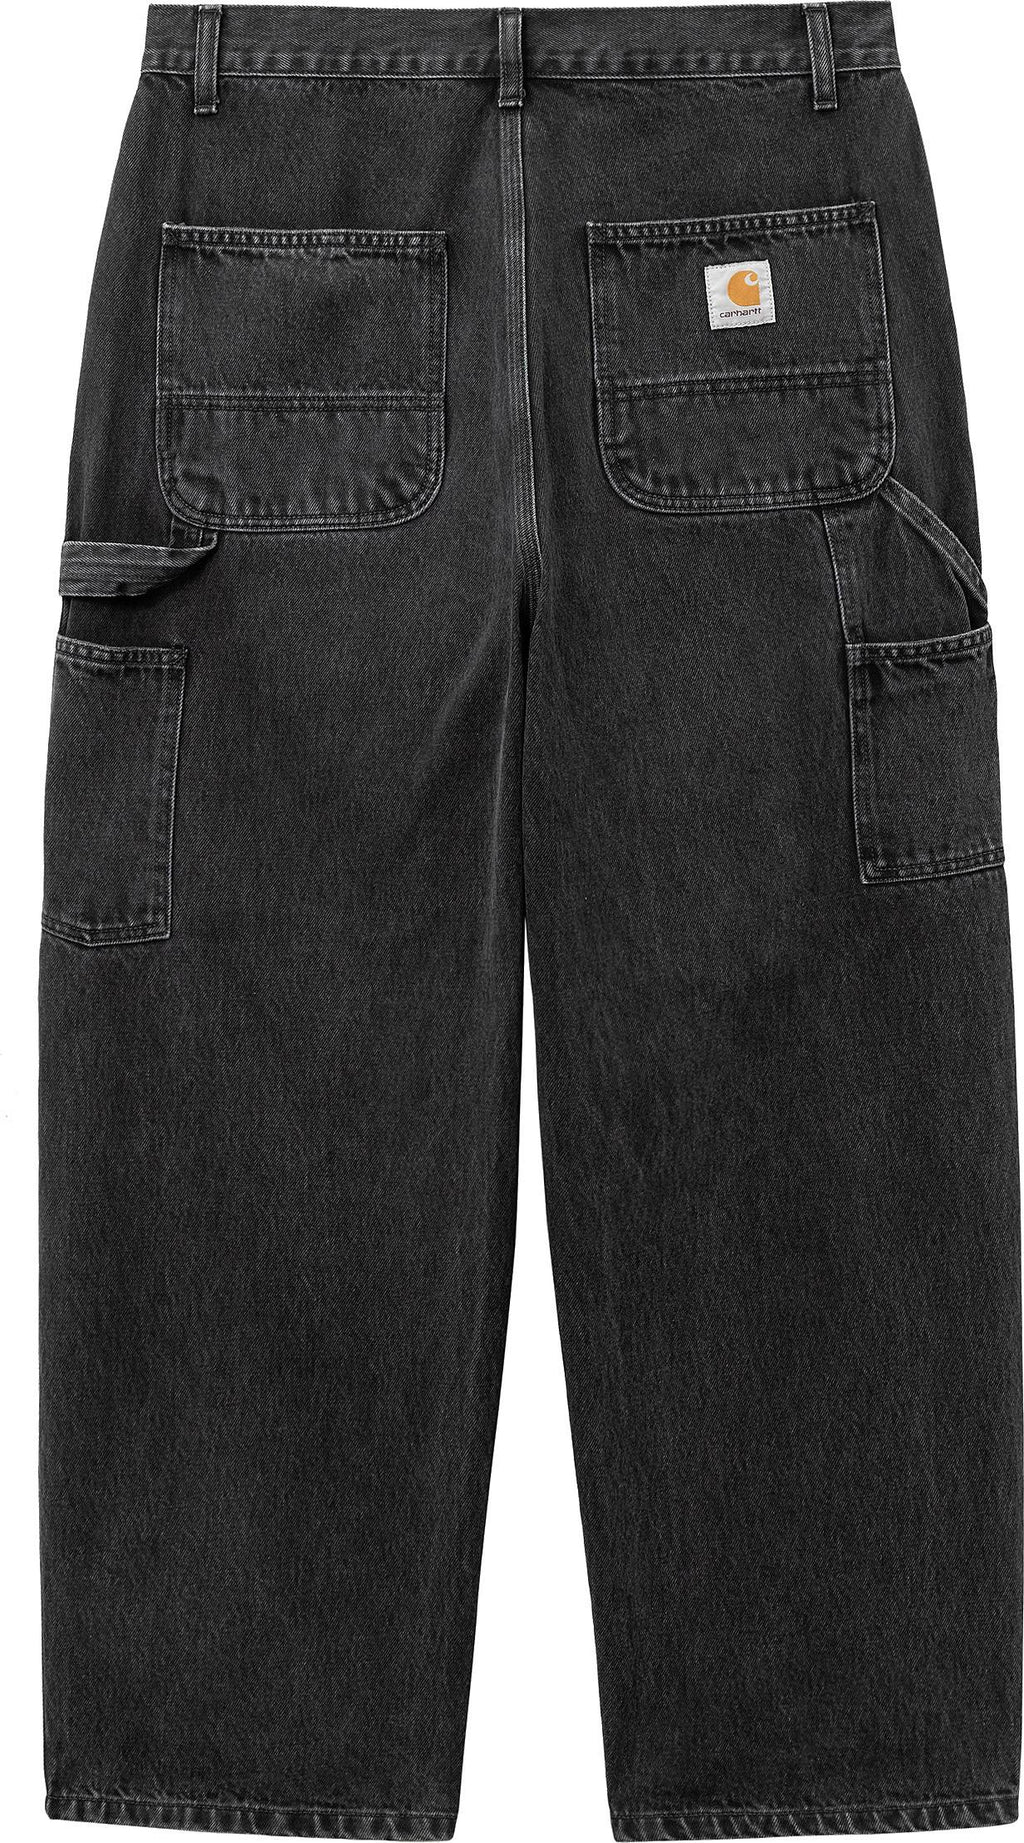  Carhartt Wip Jeans Brandon Sk Black Stone Washed Nero Uomo - 1